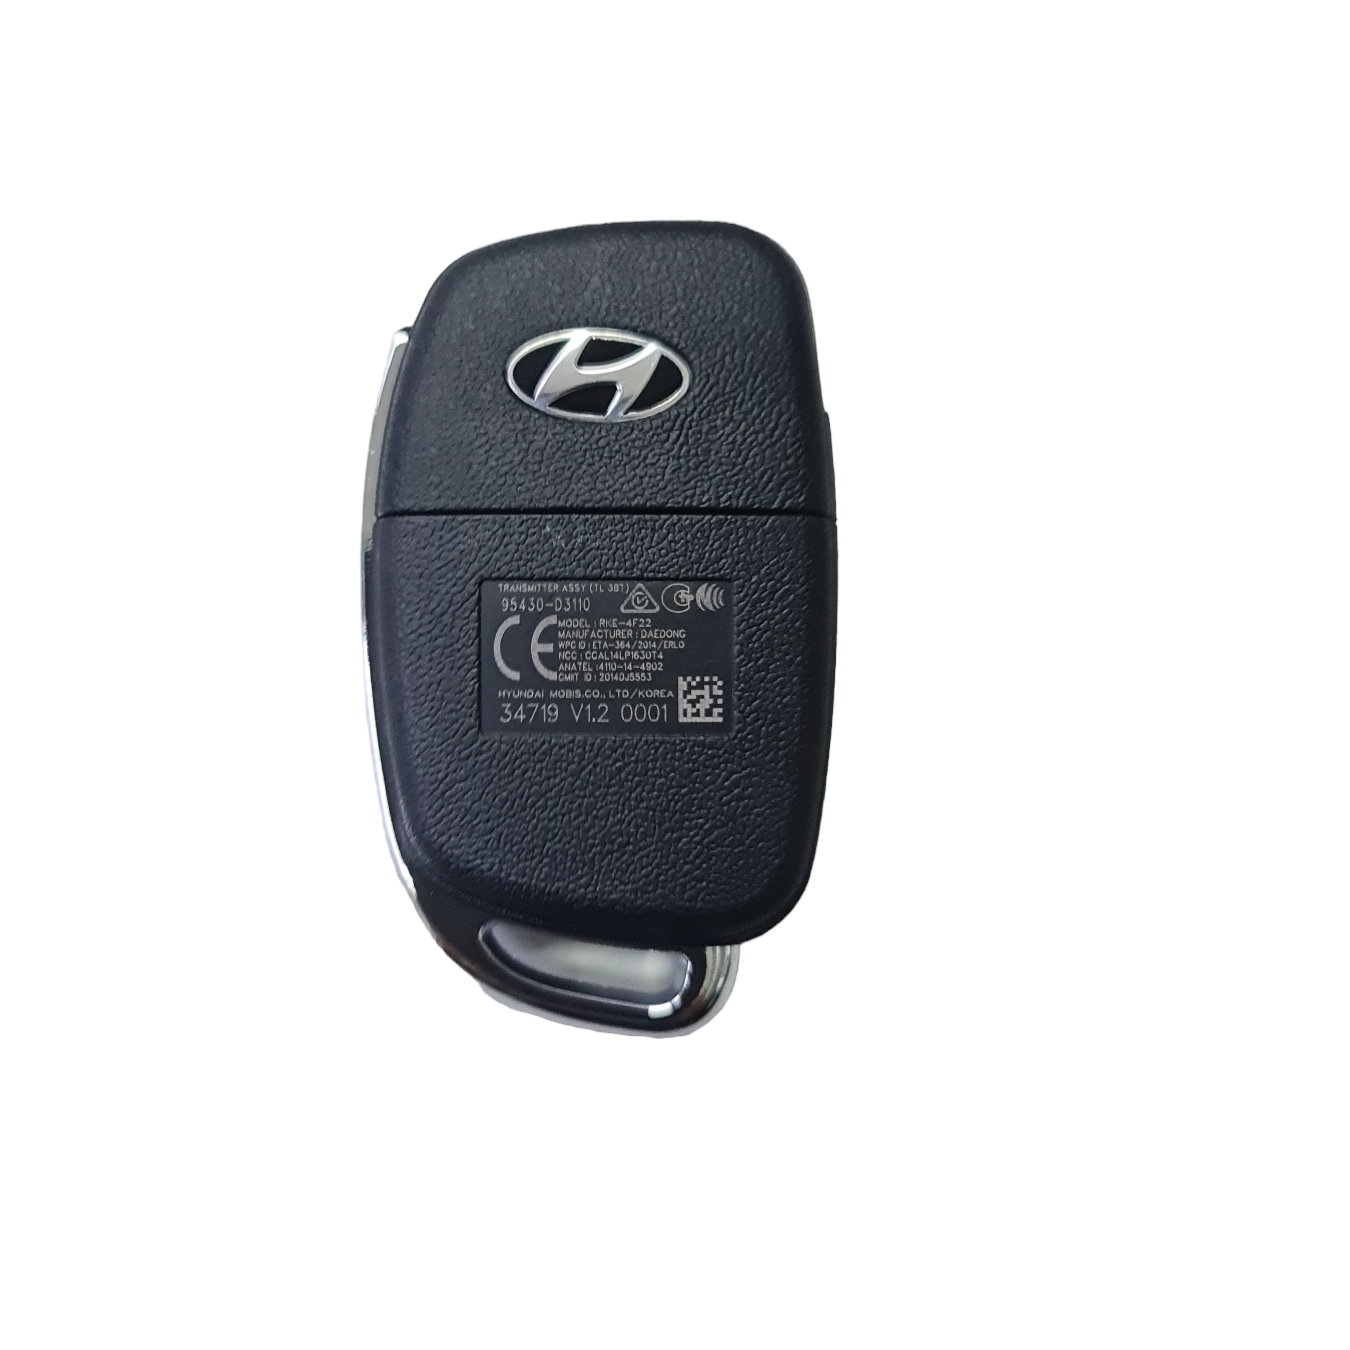 Llave Hyundai Tucson 95430-D3110